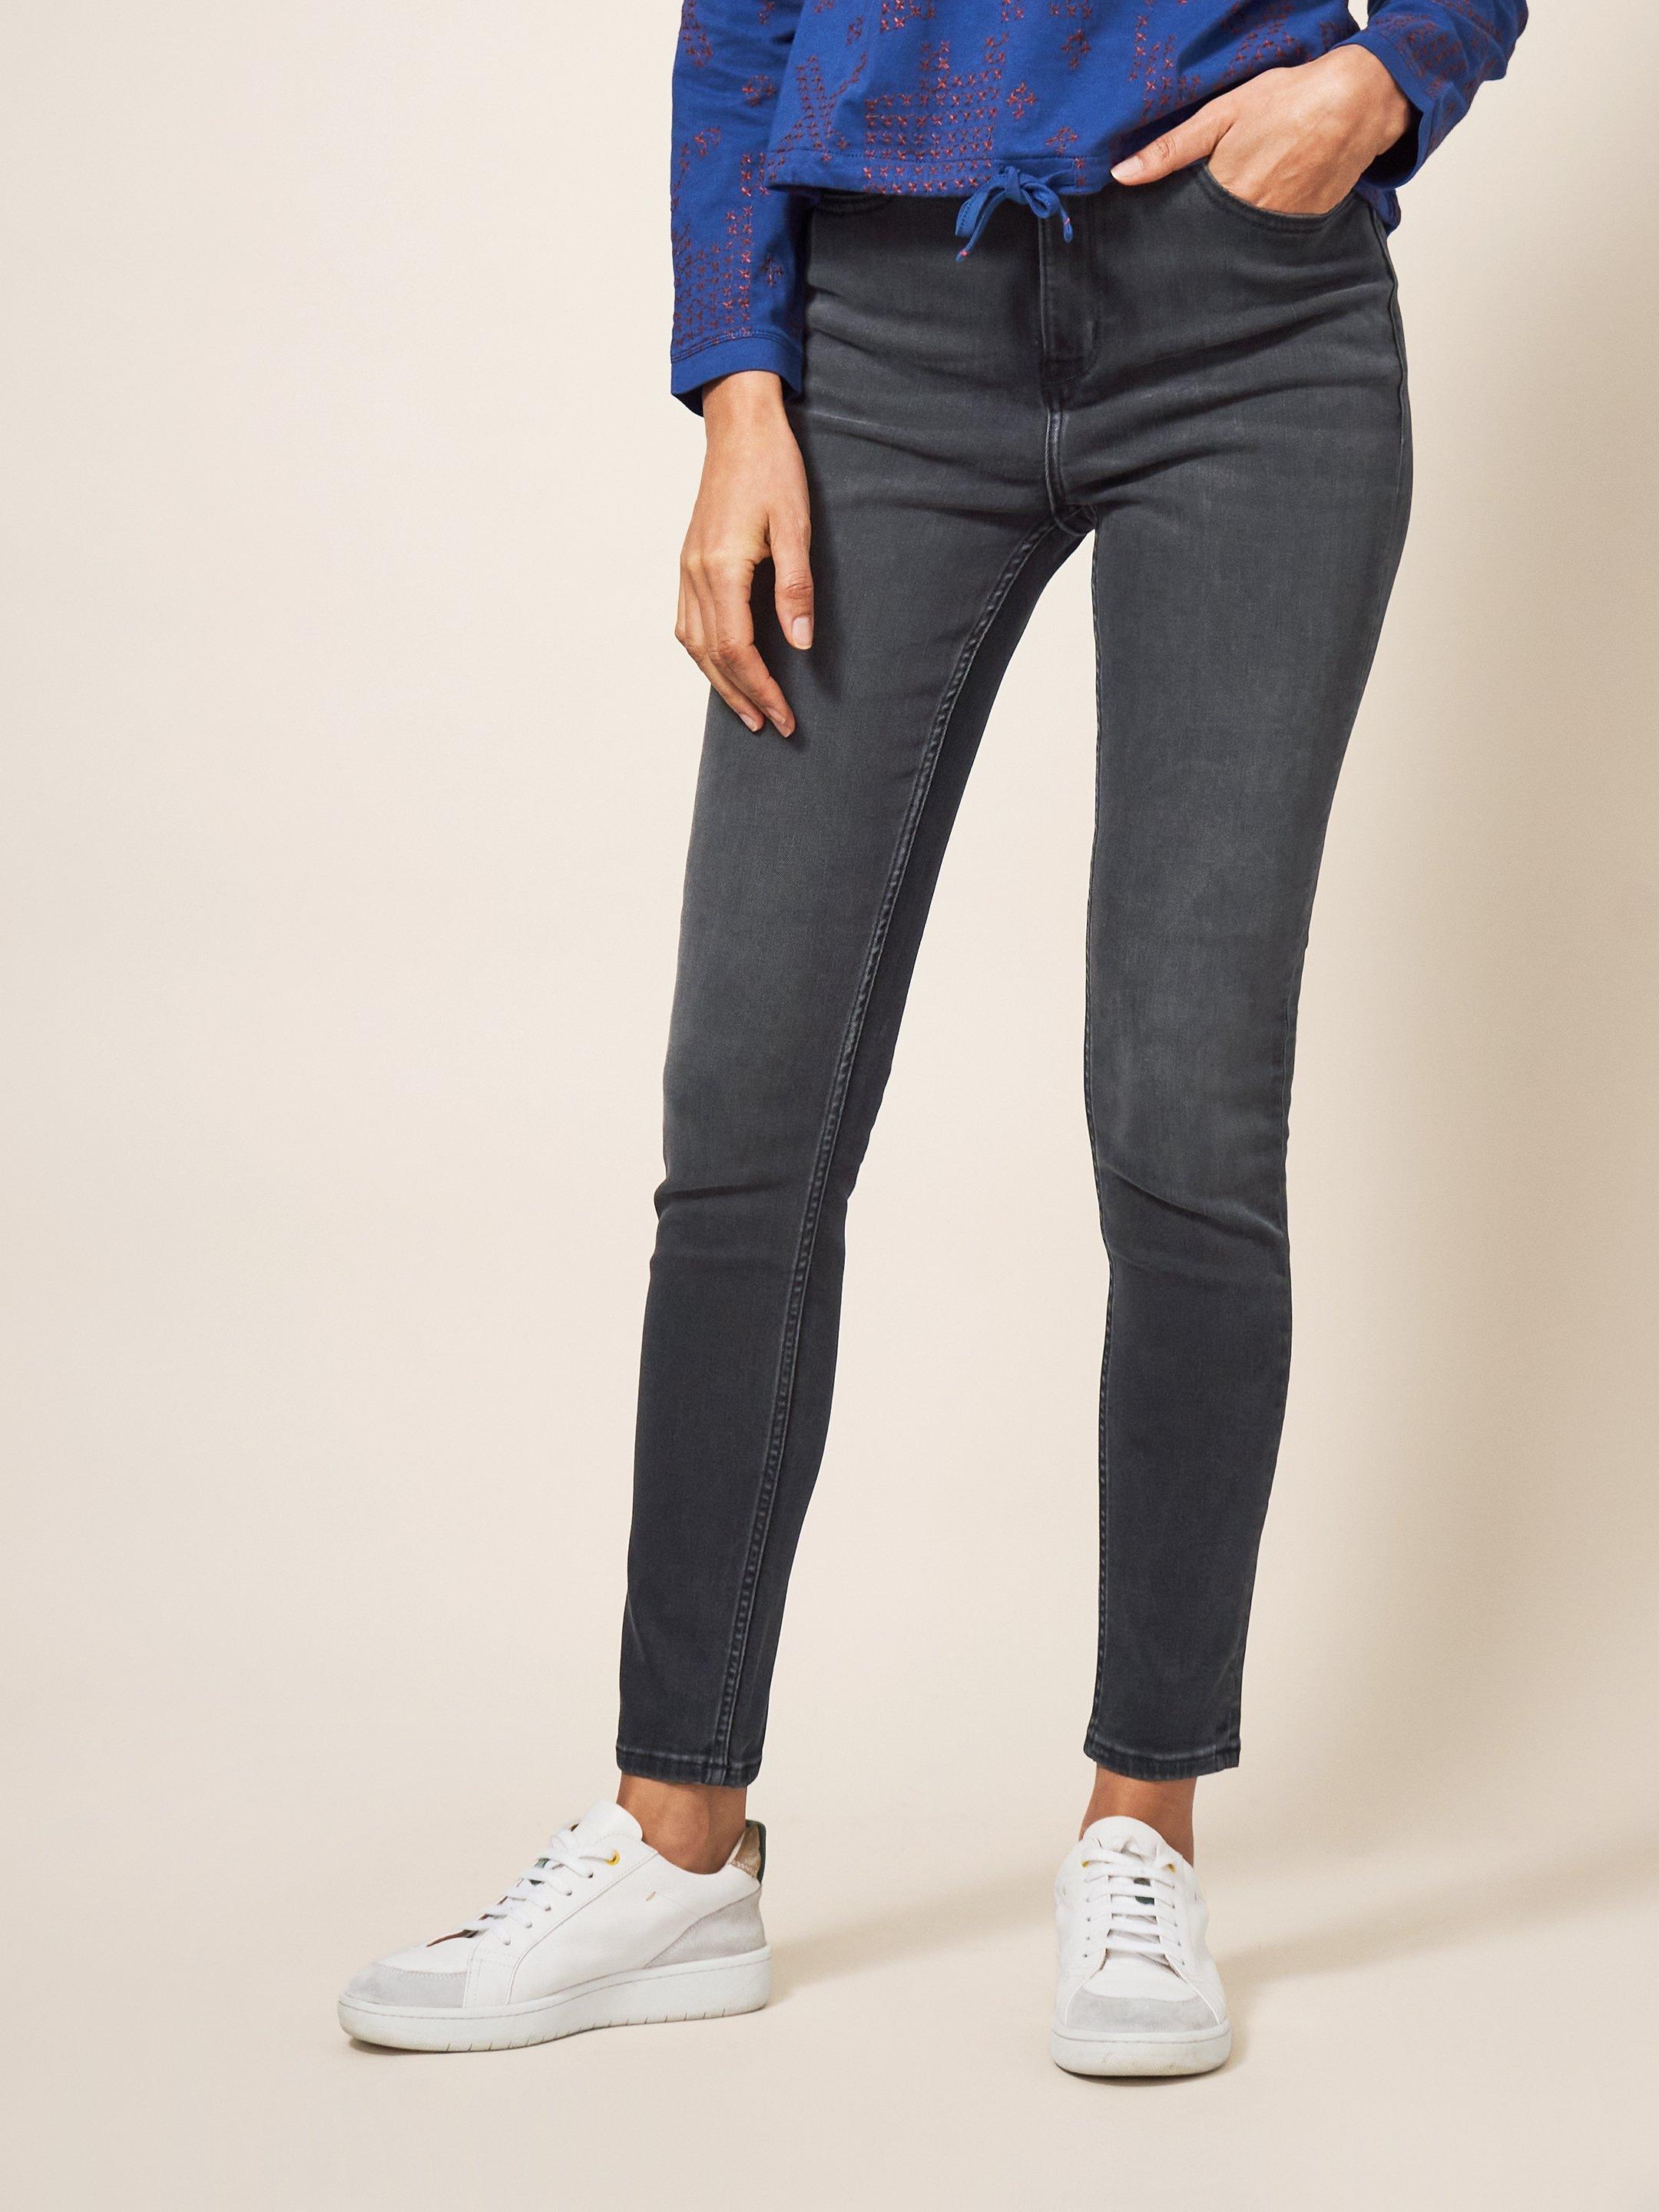 Amelia Skinny Leg Jeans in CHARC GREY - LIFESTYLE